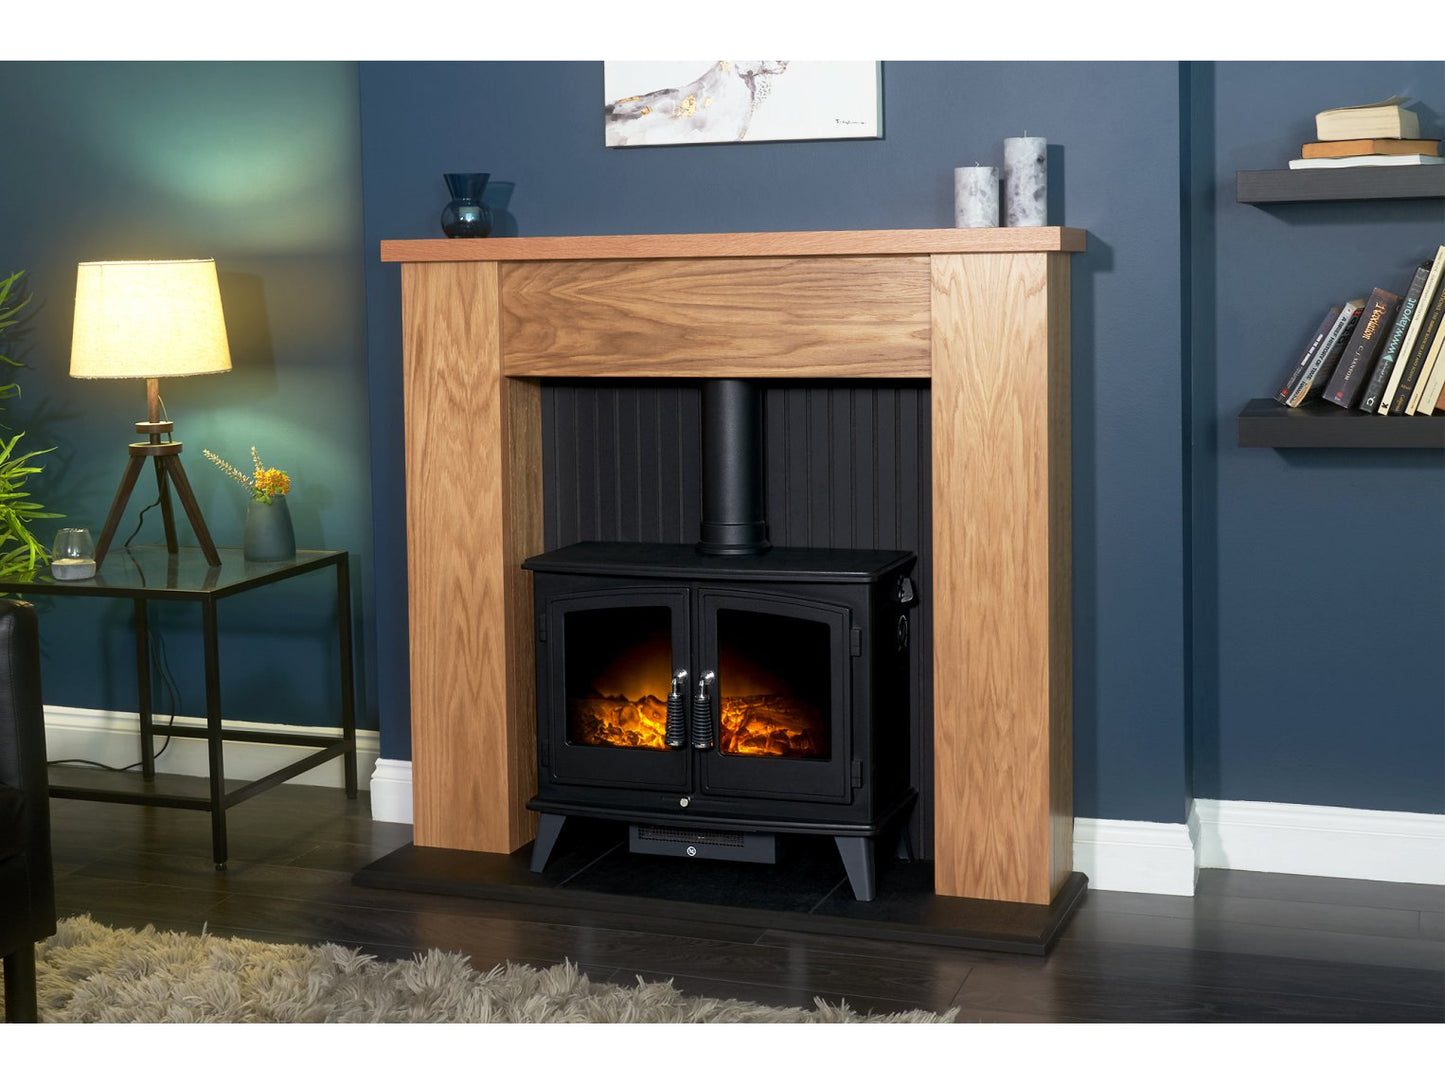 Adam New England Stove Fireplace Oak & Black + Woodhouse Electric Stove Black, 48"